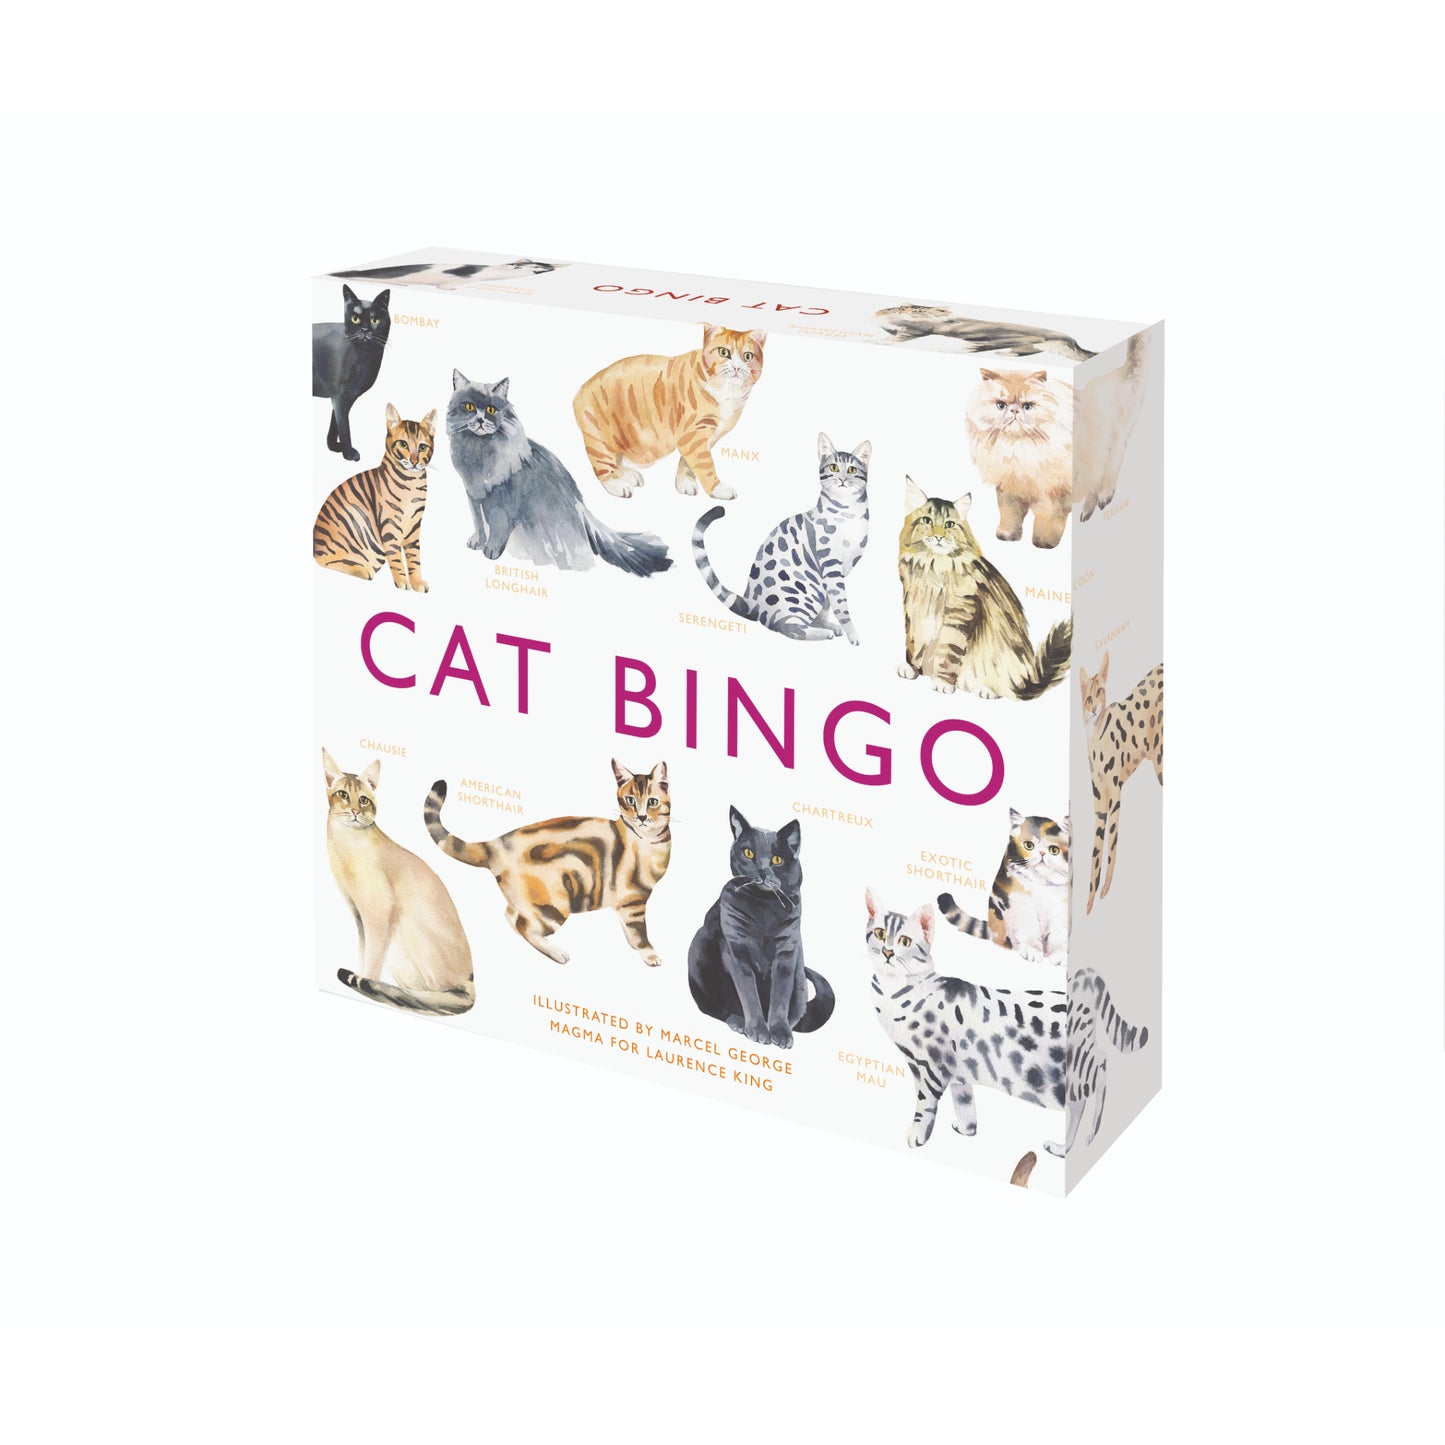 Cat Bingo - Tiny Tiger Gift Shop